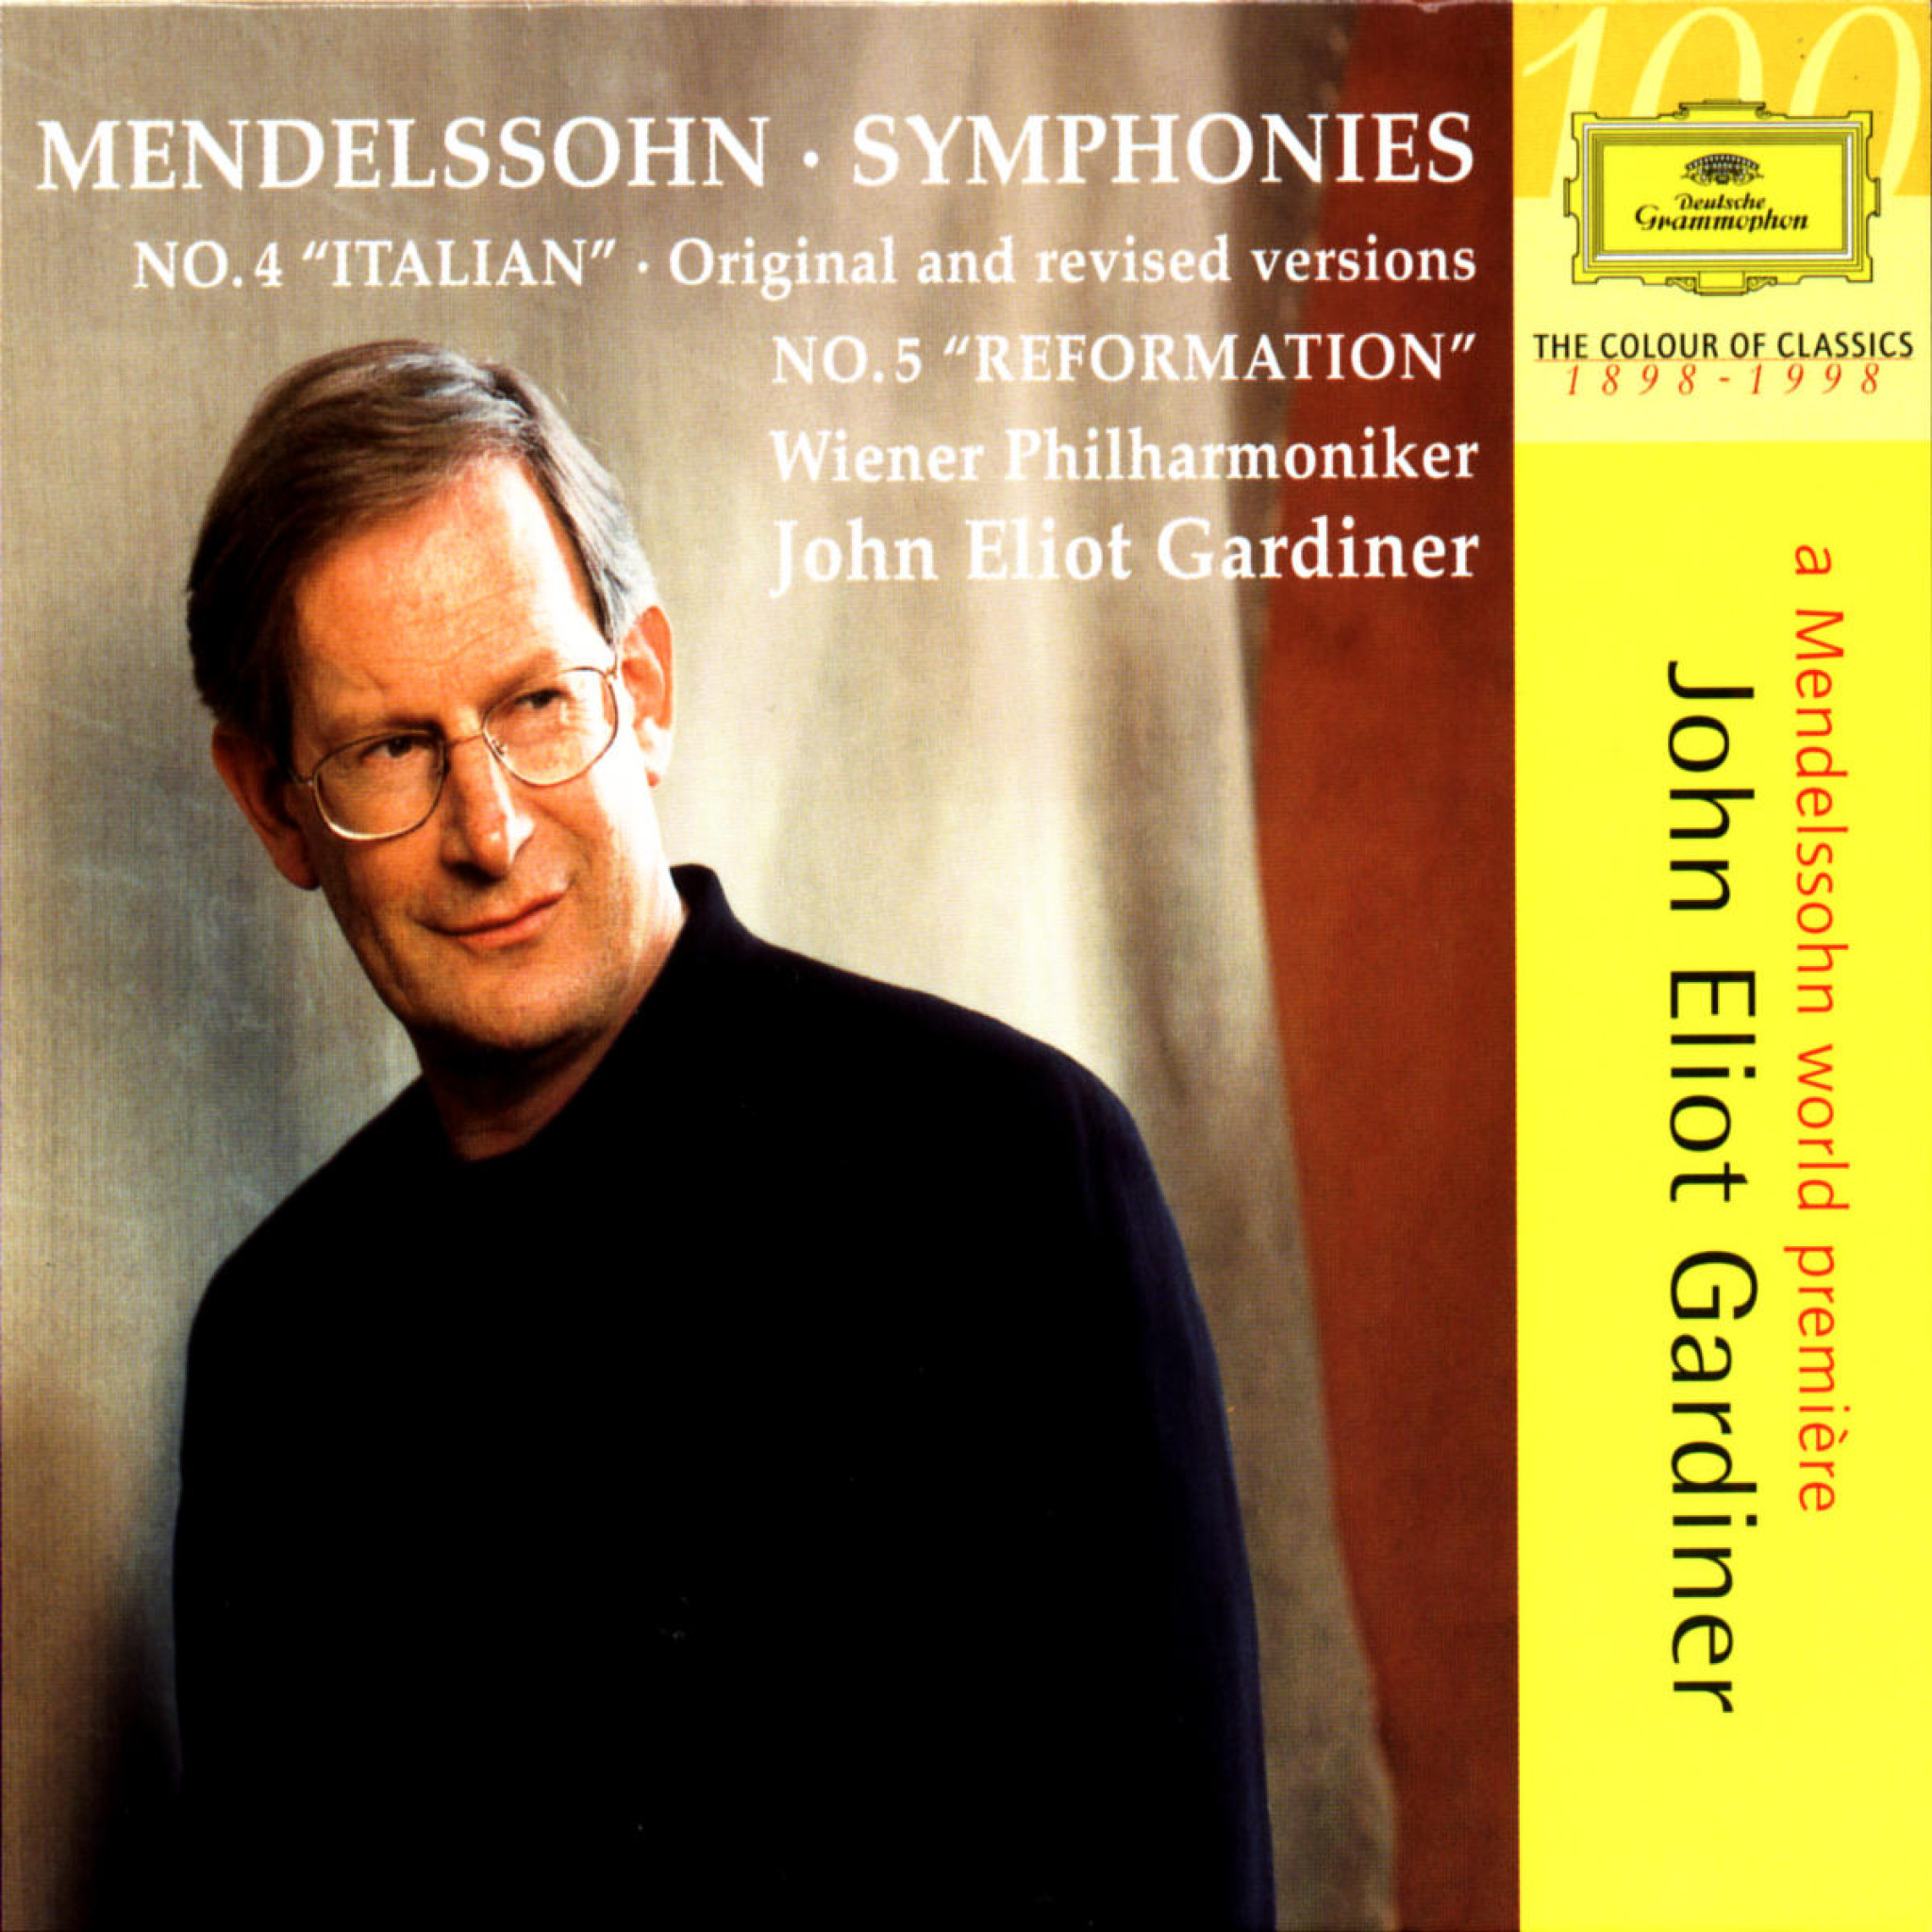 Mendelssohn: Symphonies Nos.4 "Italian" original and revised versions & 5 "Reformation" 0028945915627